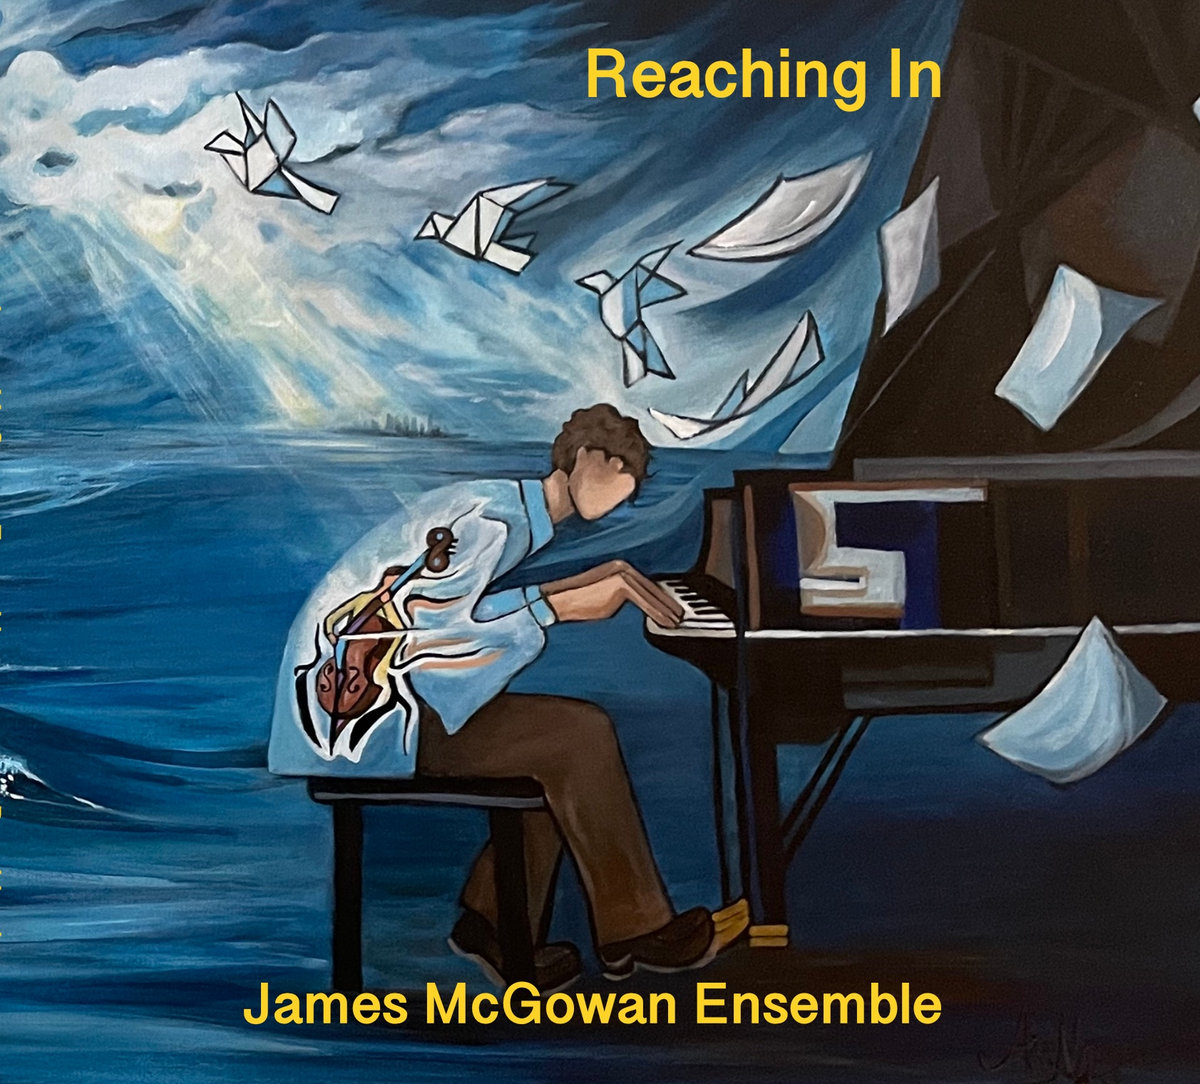 James McGowan Ensemble ‘Reaching In’ album artwork